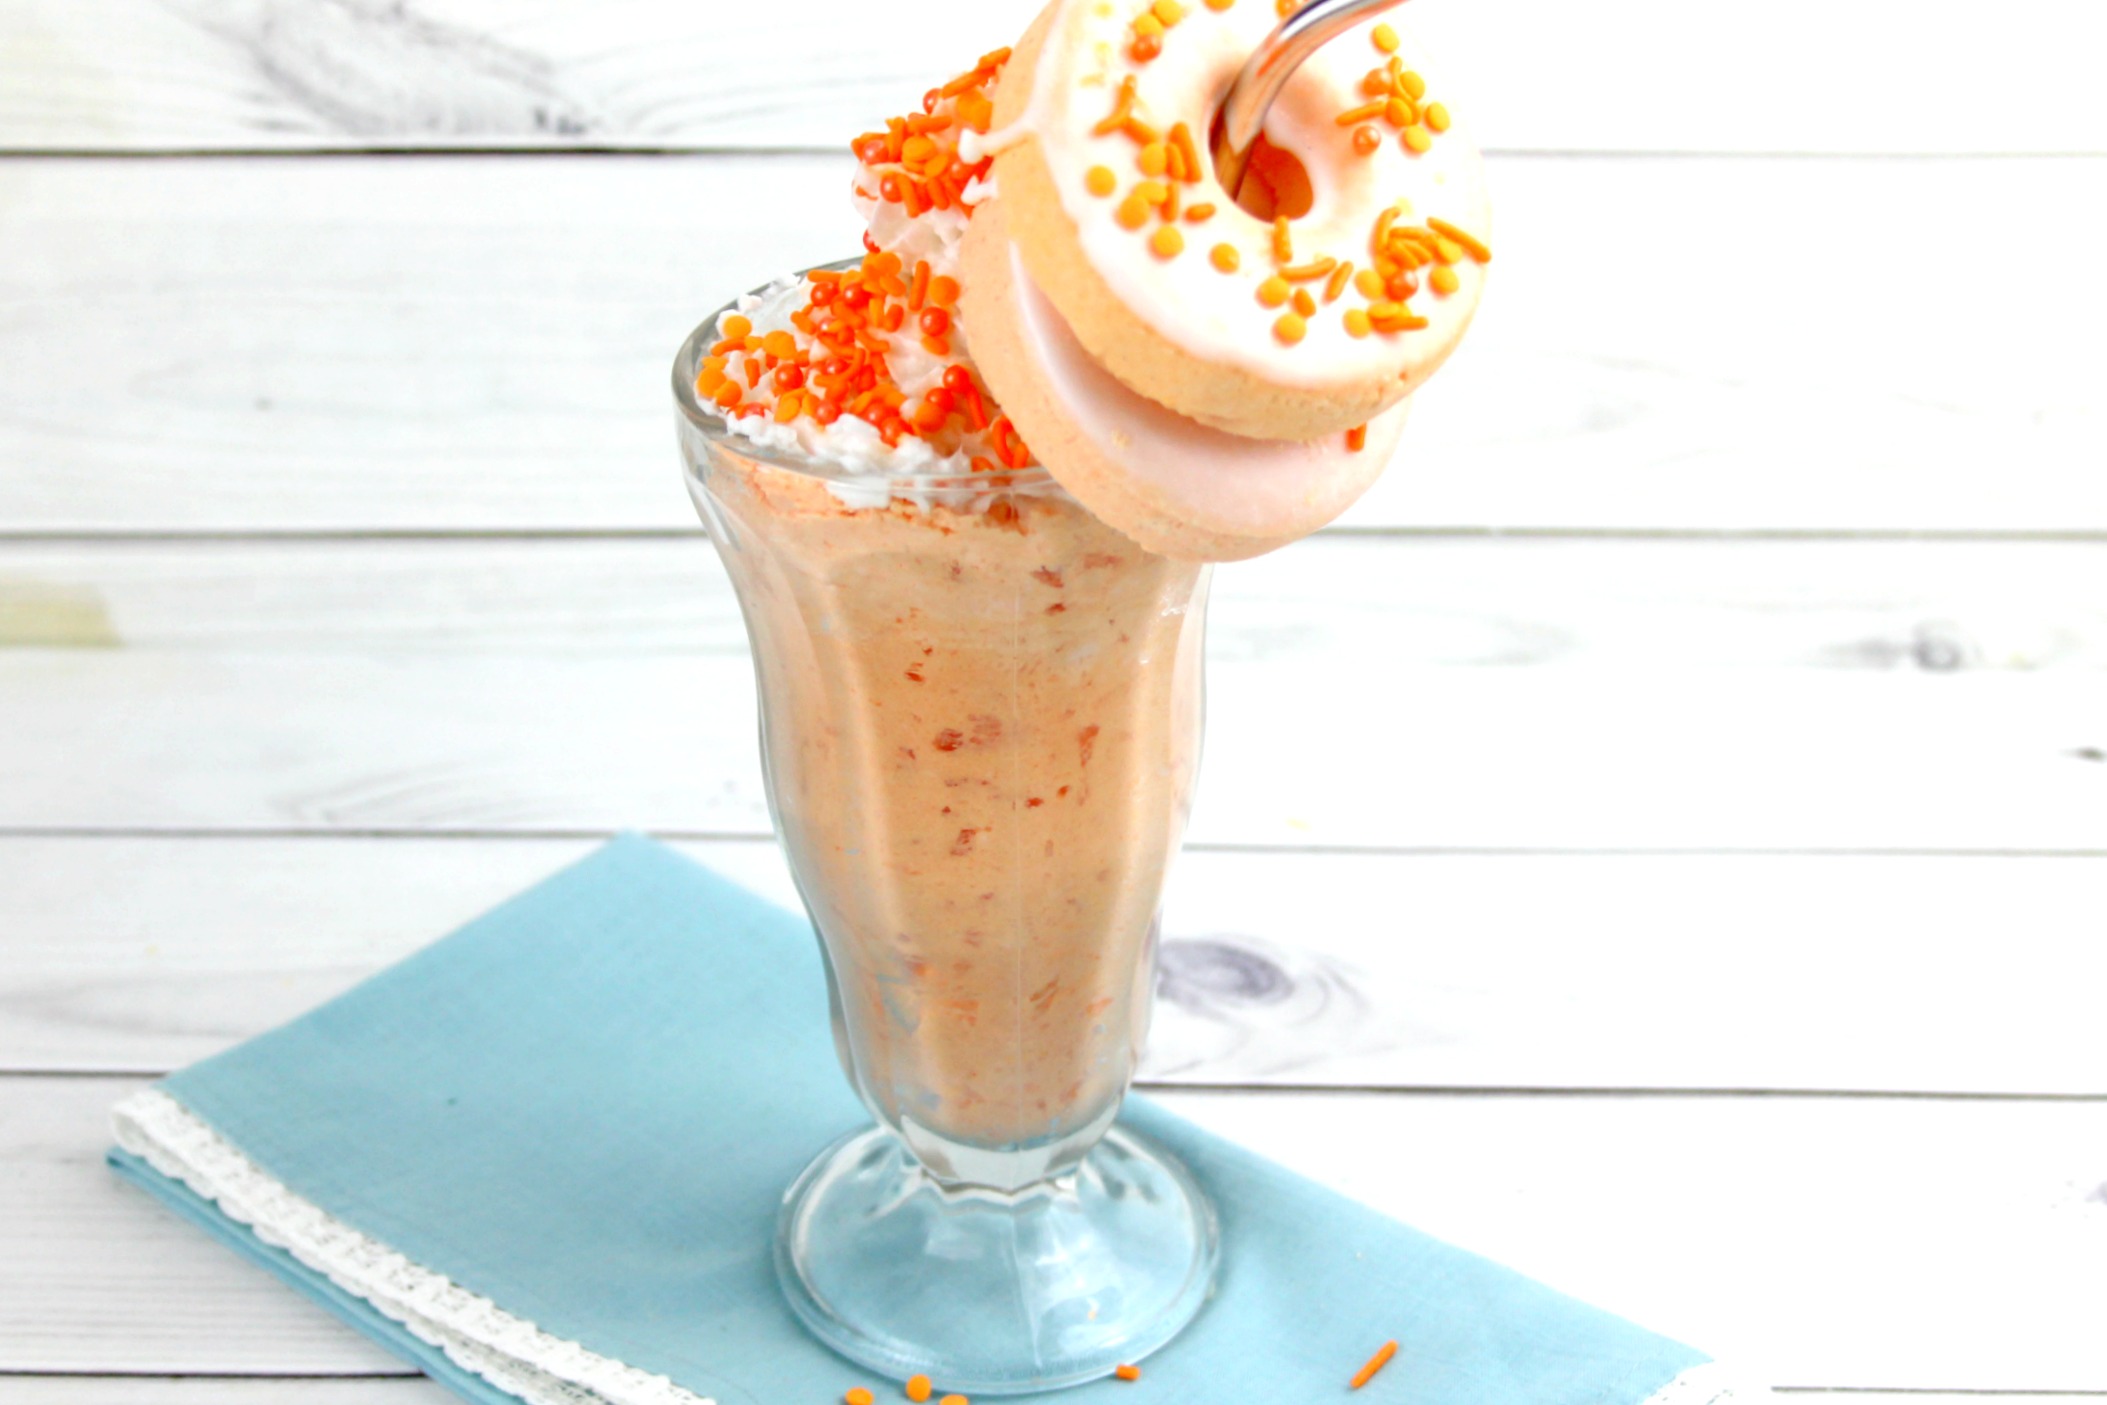 Orange Creamsicle Whipped Soap “Milkshake” Recipe